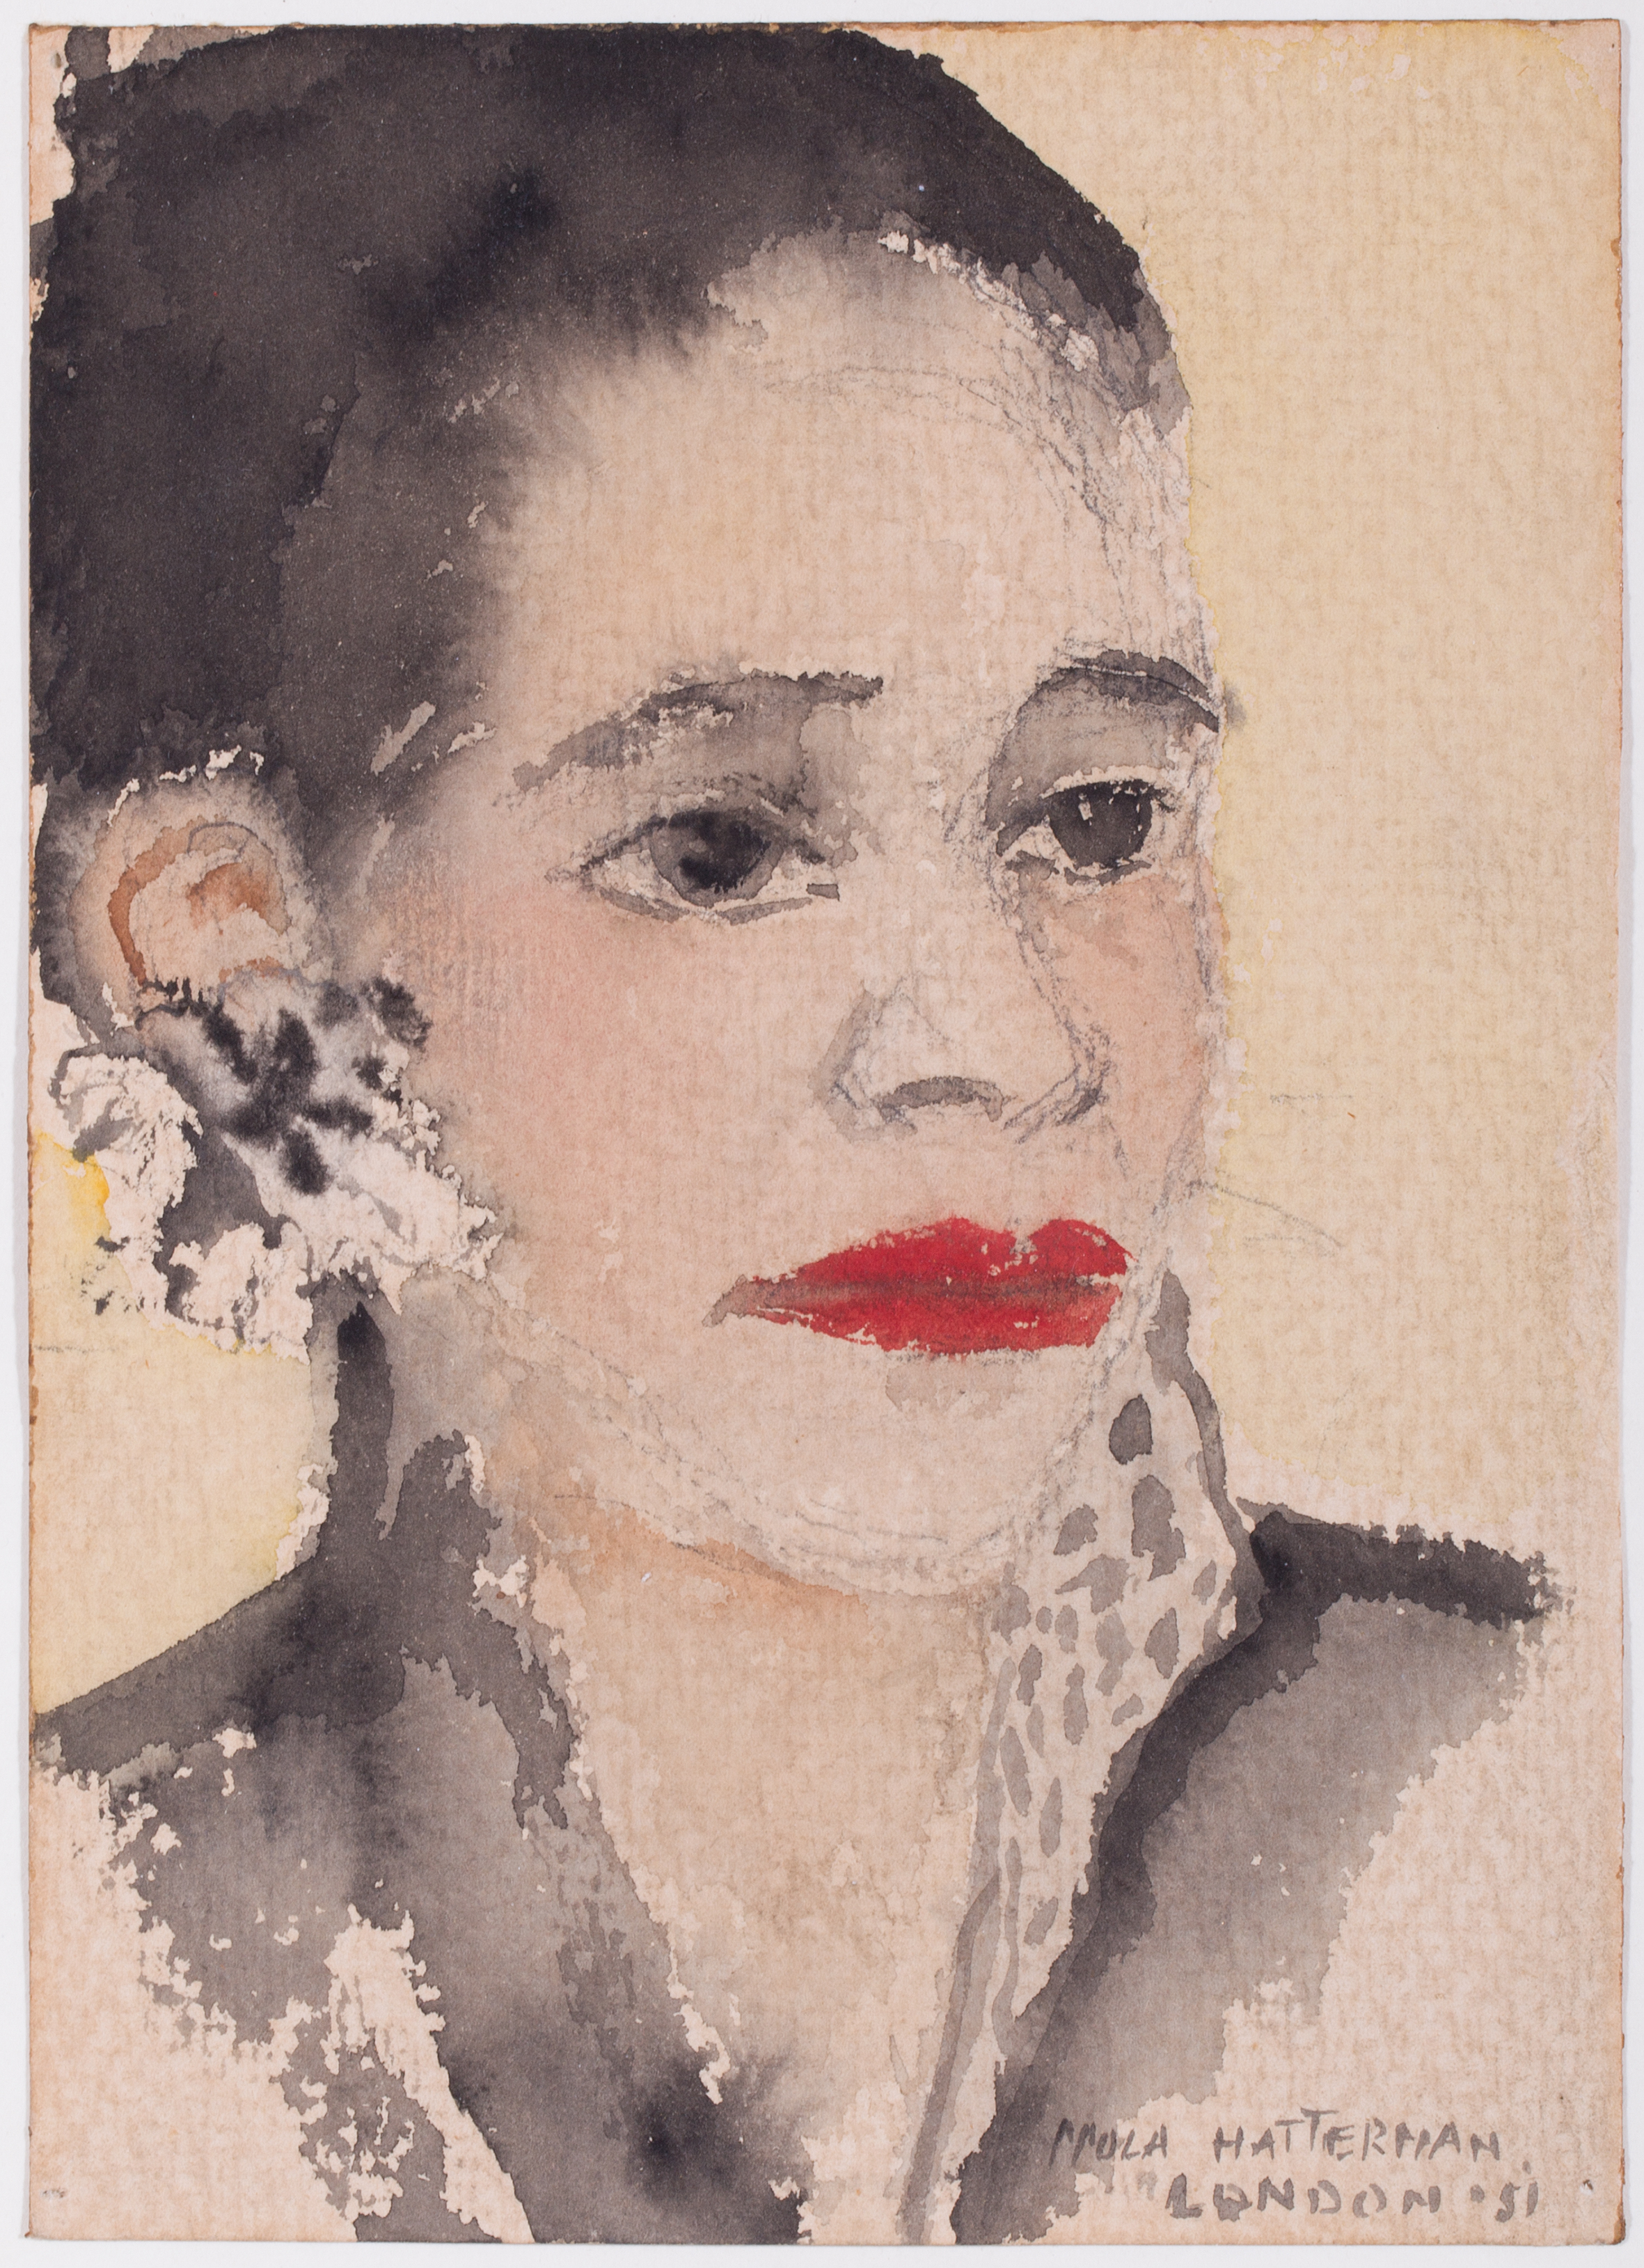 Nola Hatterman (1899-1984)  Selfportrait